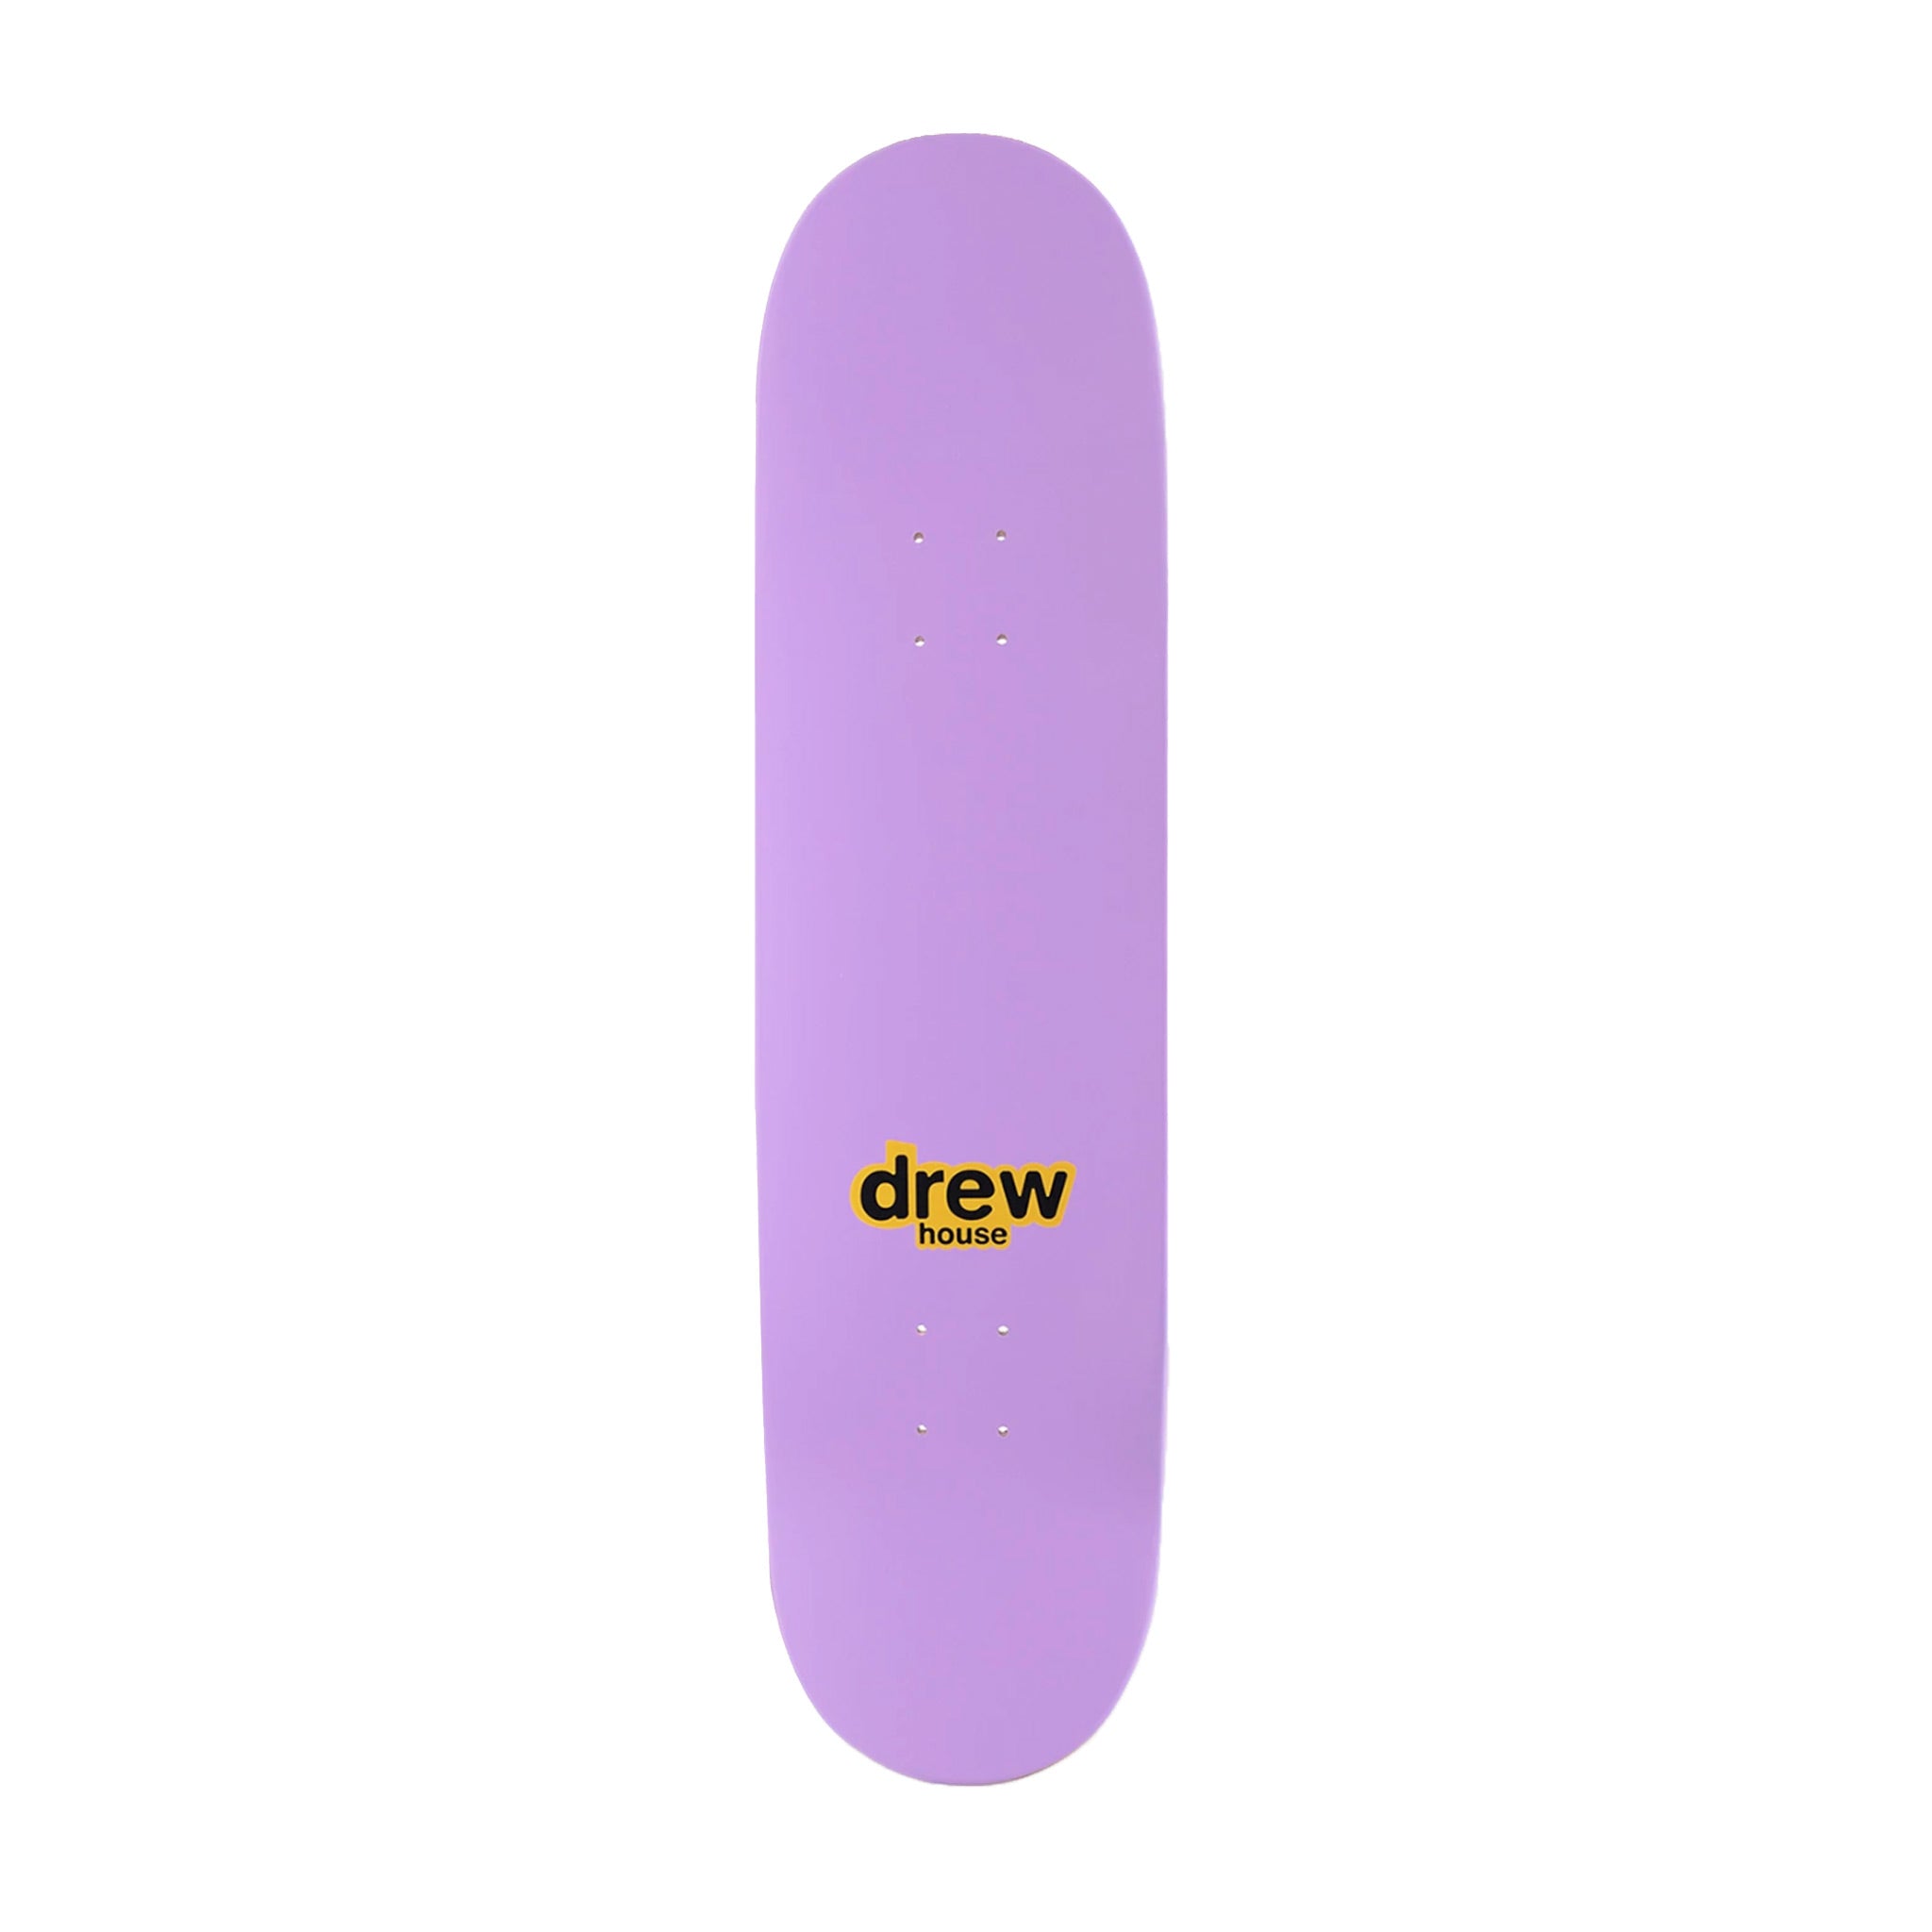 Drew House Mascot Skate Deck - Lavender | Australia New Zealand BACK